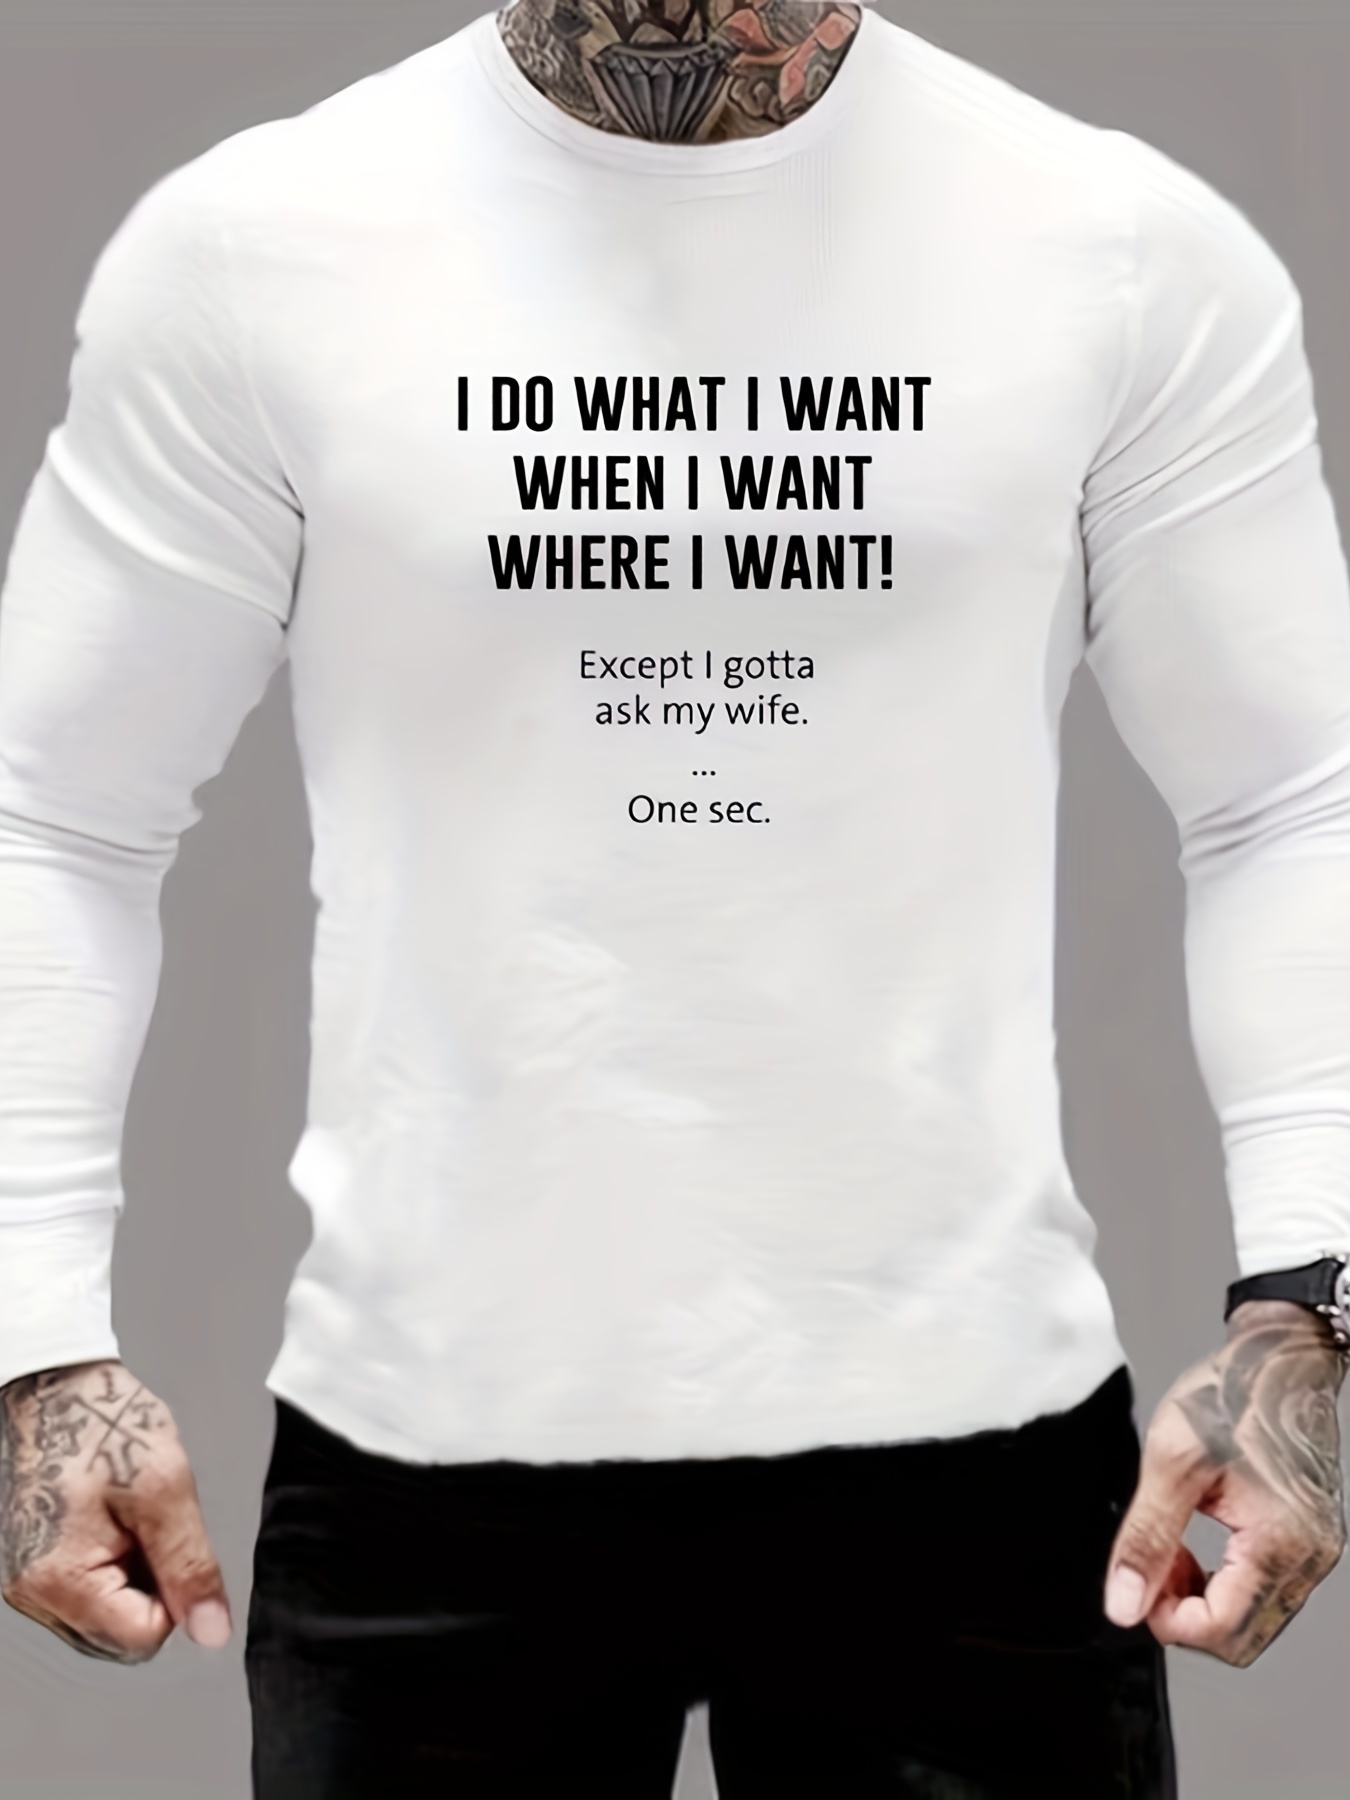  Camisa personalizada para hombre, camiseta